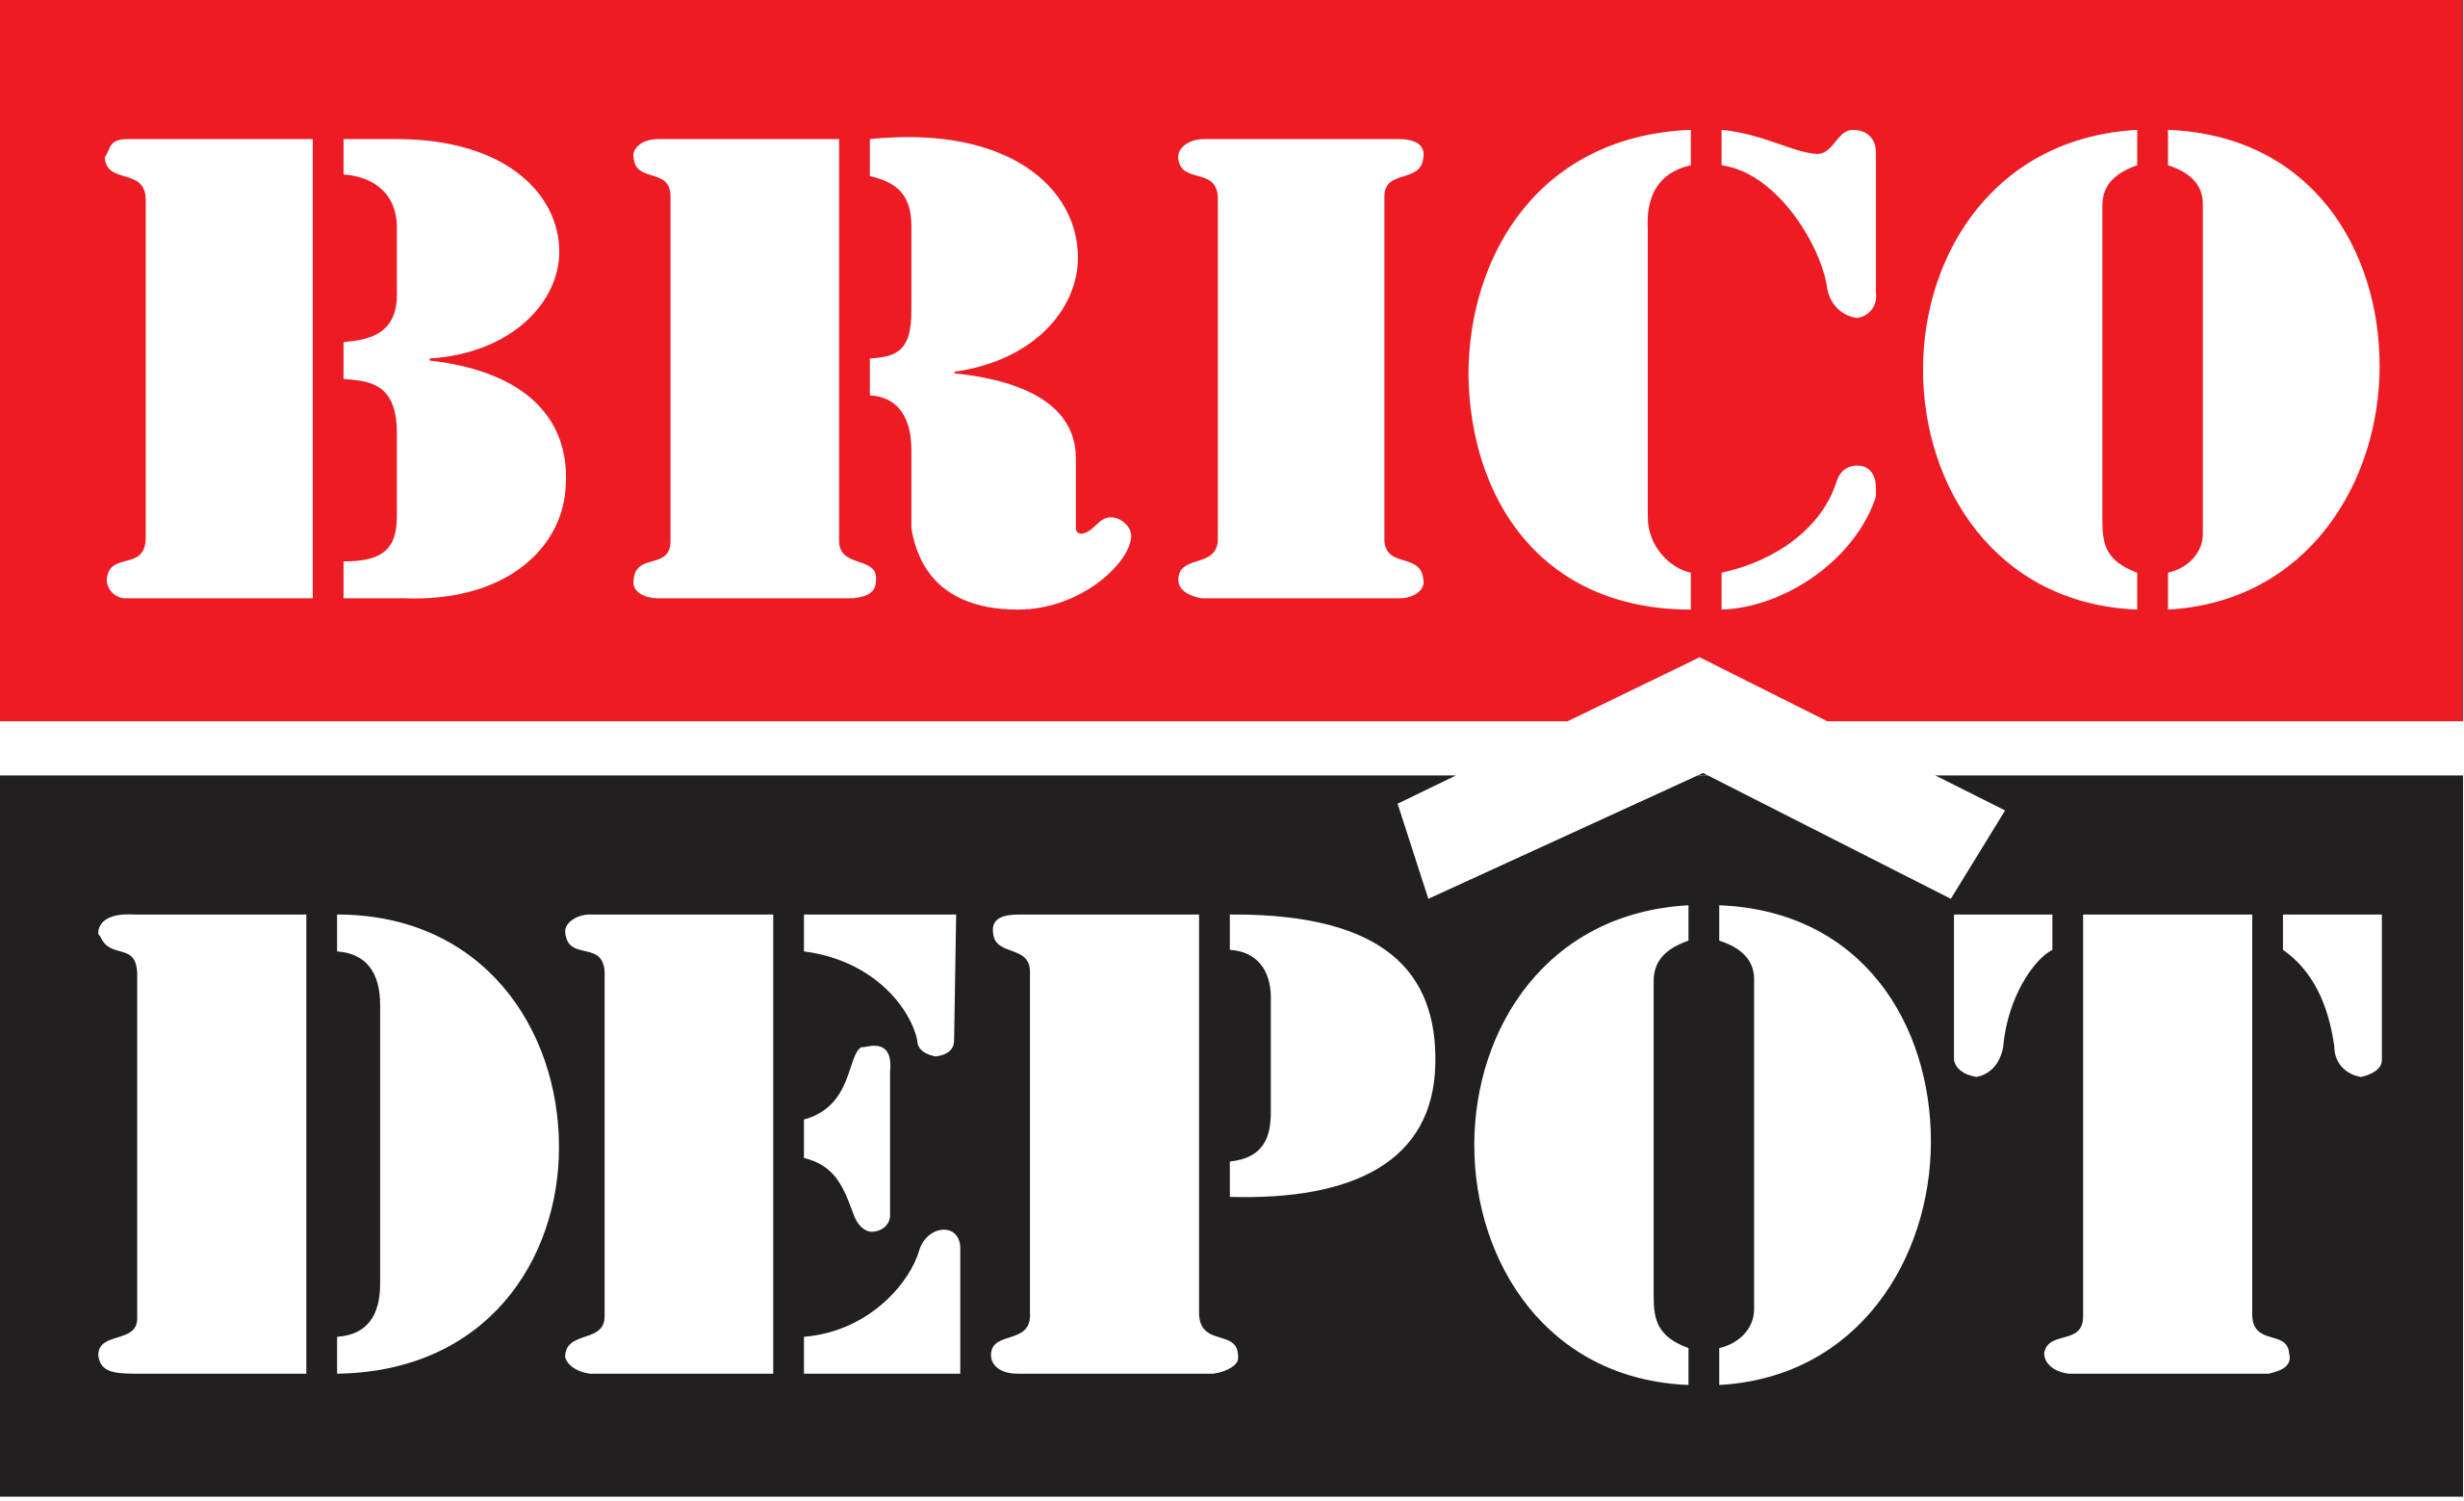 Brico depot logo